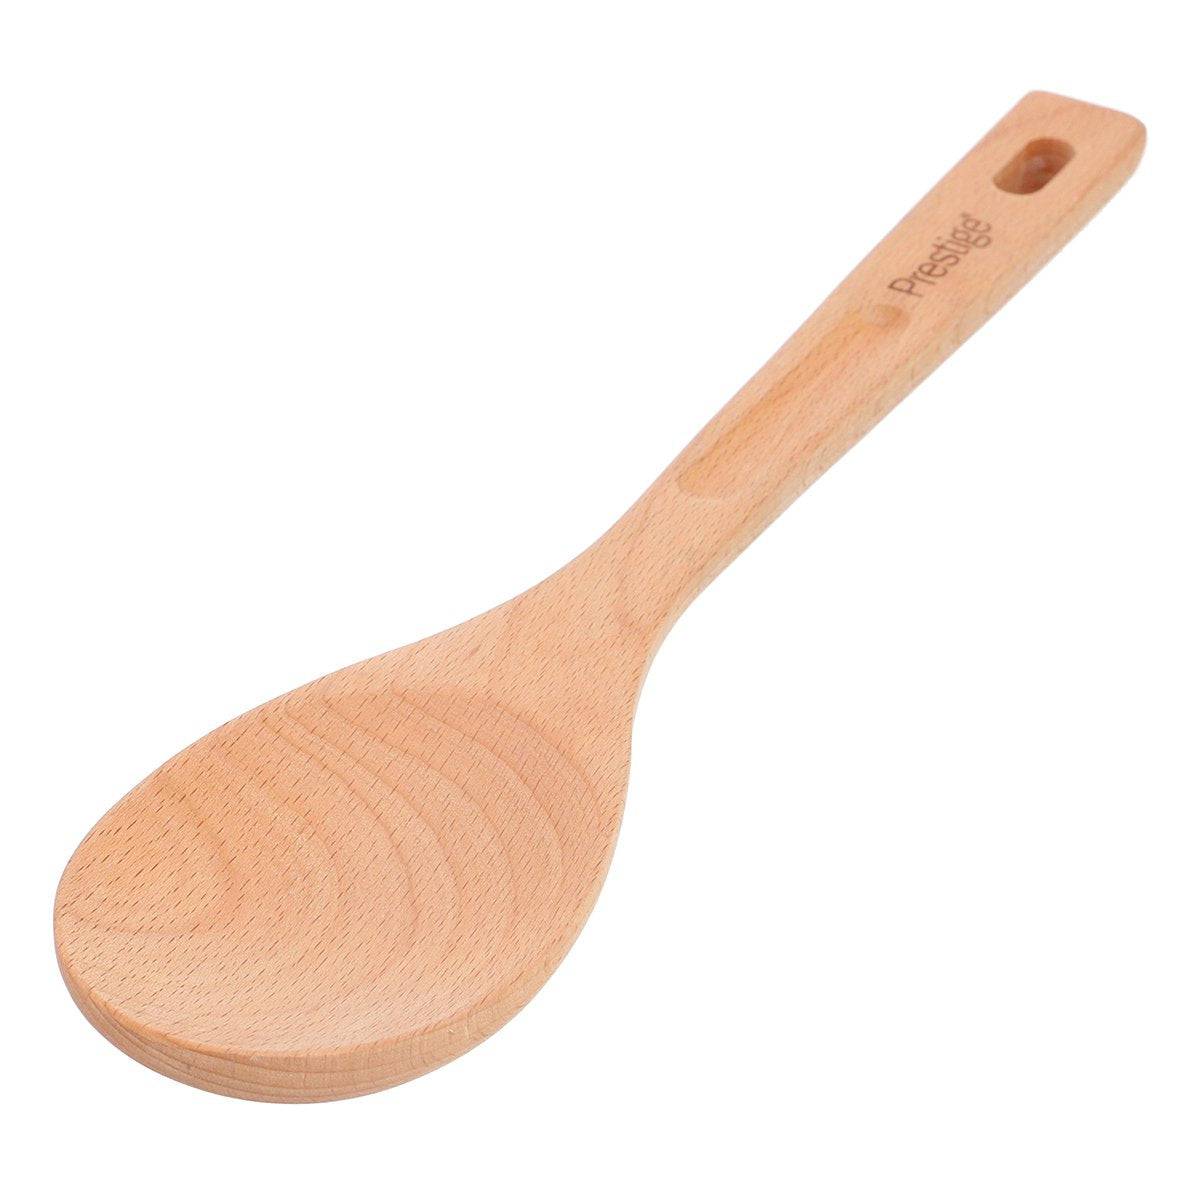 Prestige Wood Spoon 51174(53973)